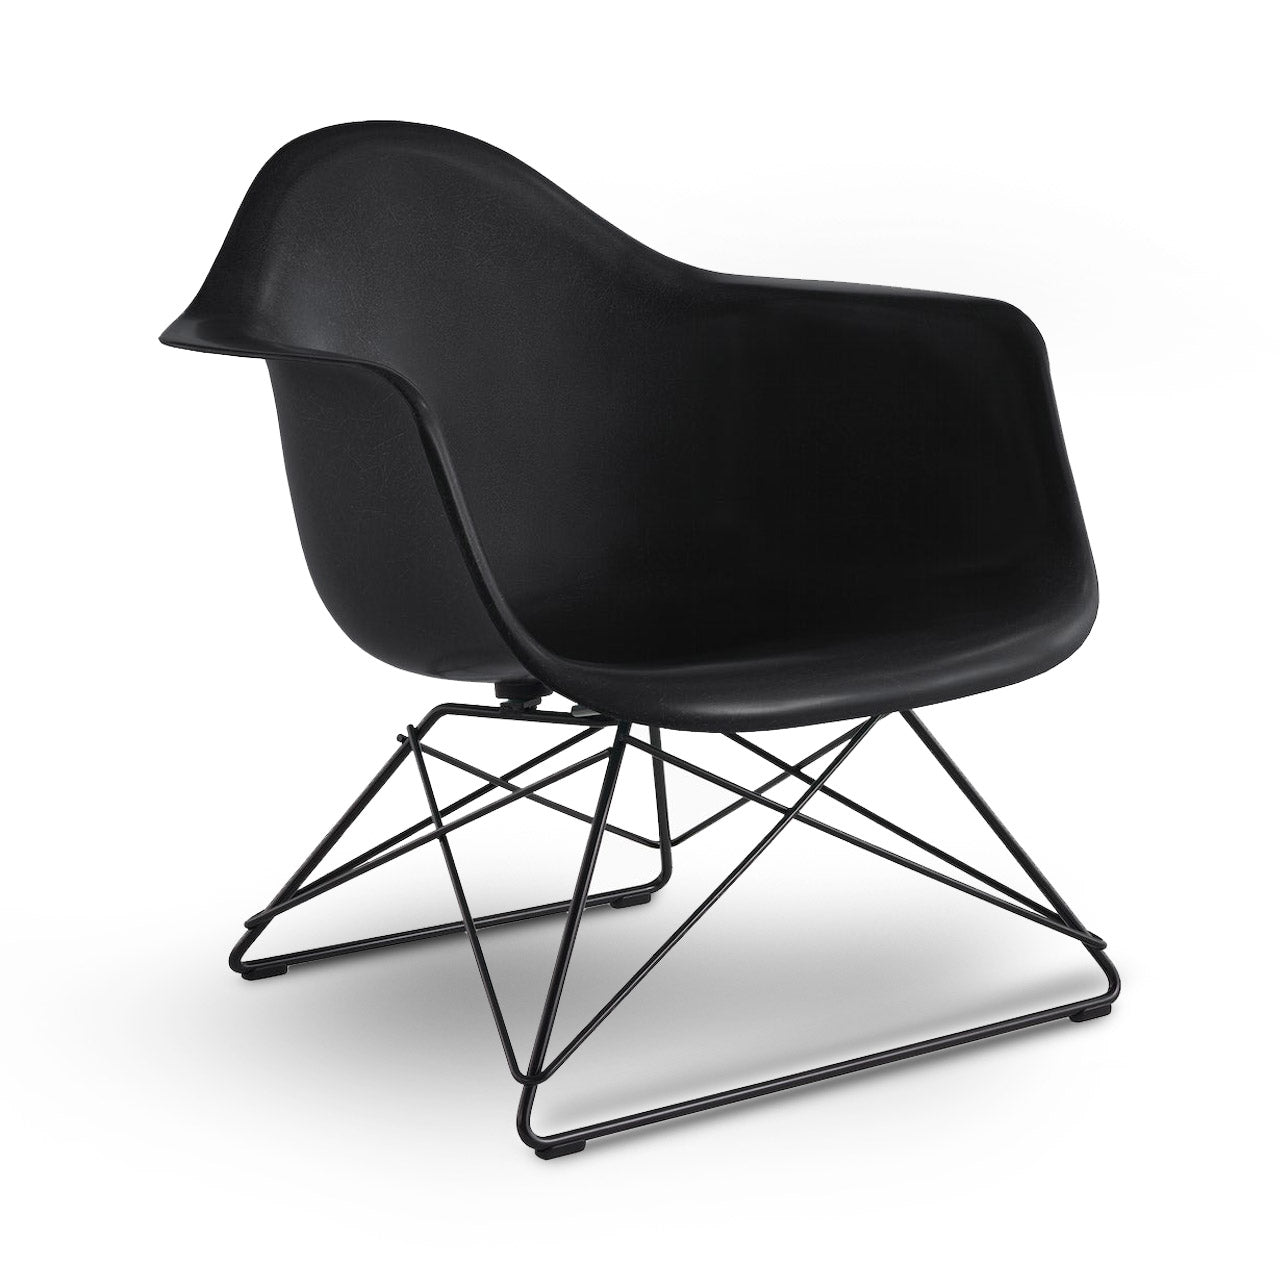 Eames geformter Fiberglas-Sessel mit niedrigem Drahtgestell